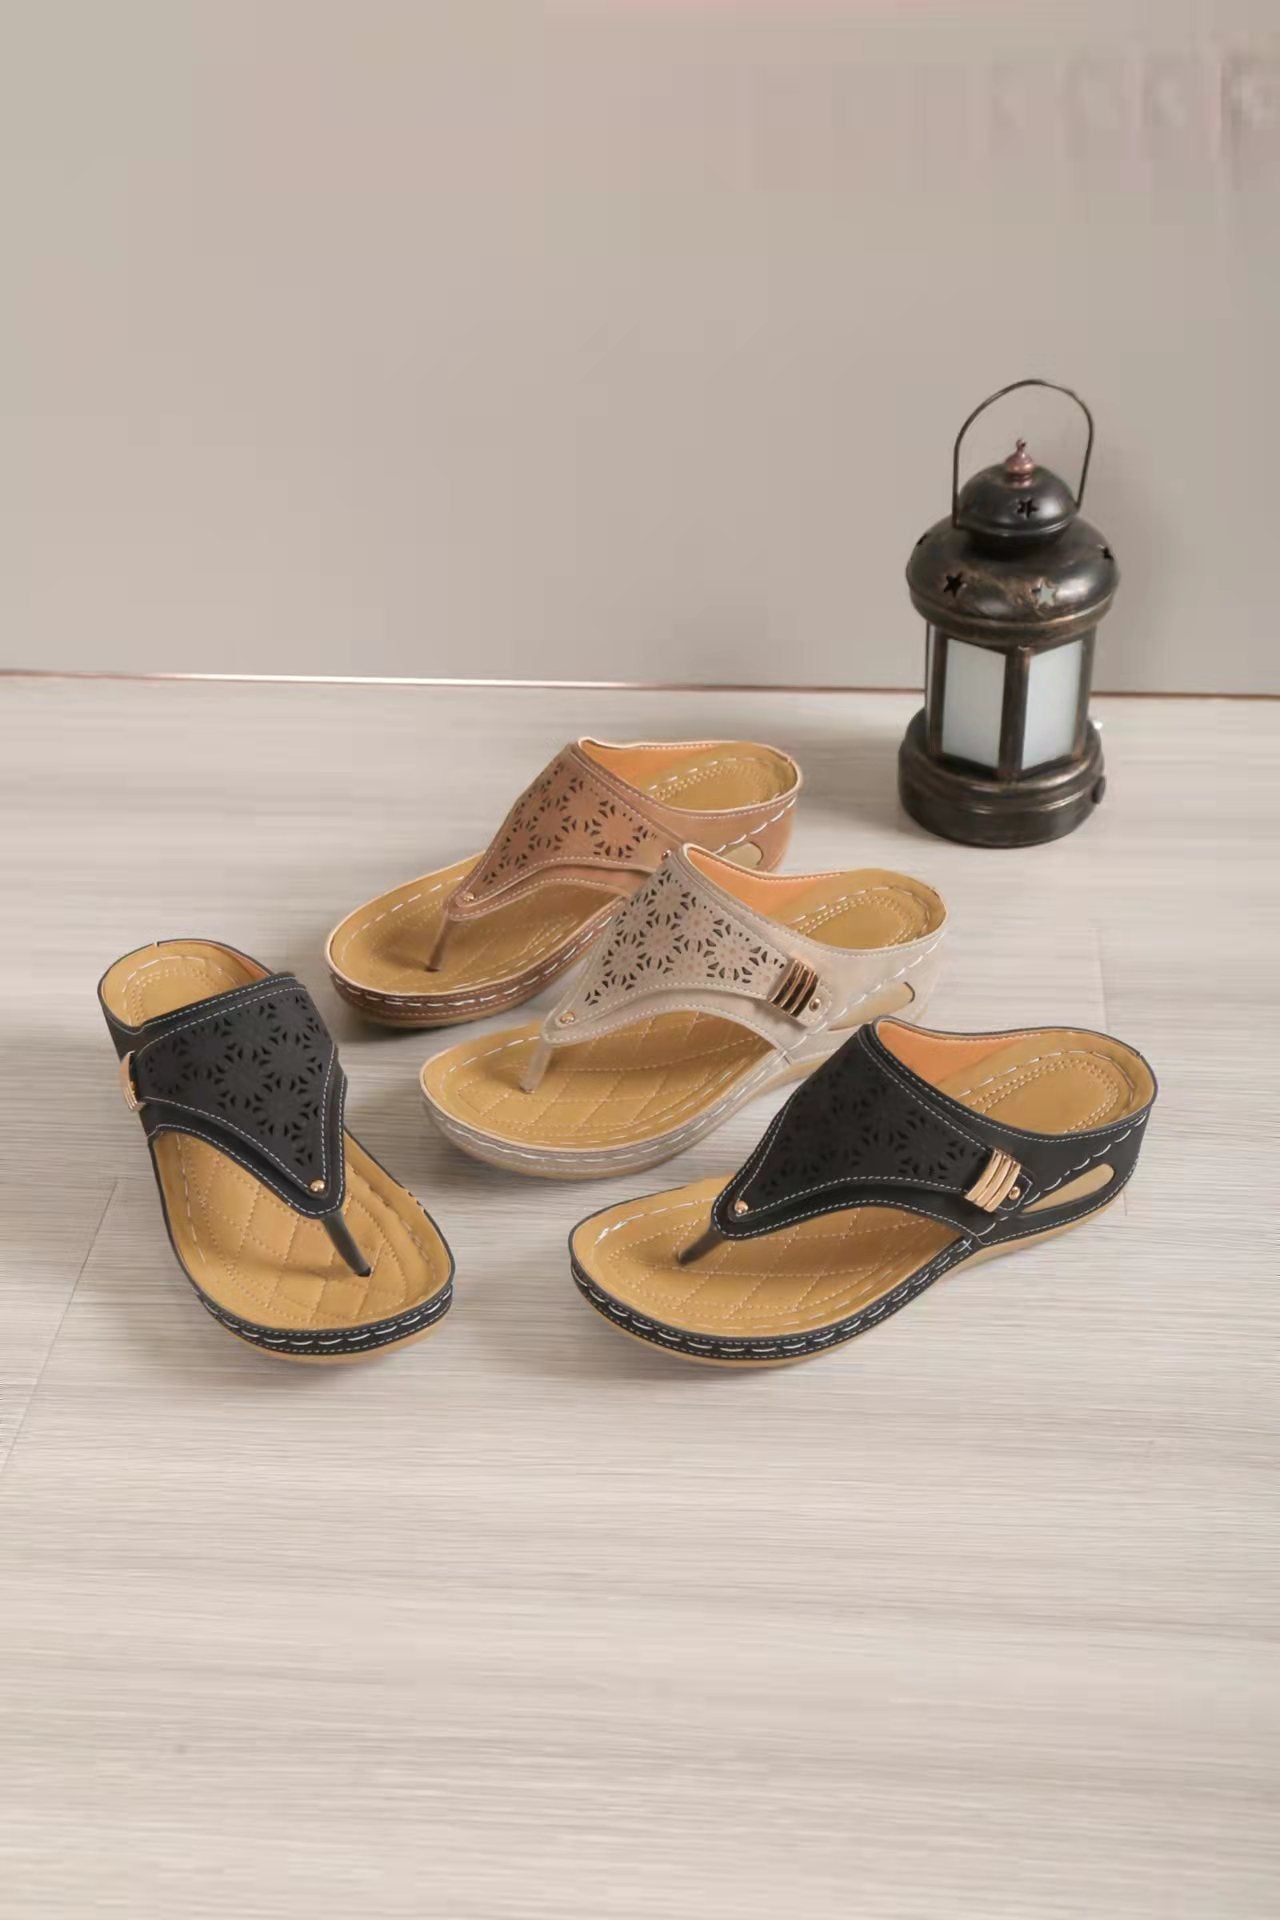 Wedge Sandals Women's Platform Roman